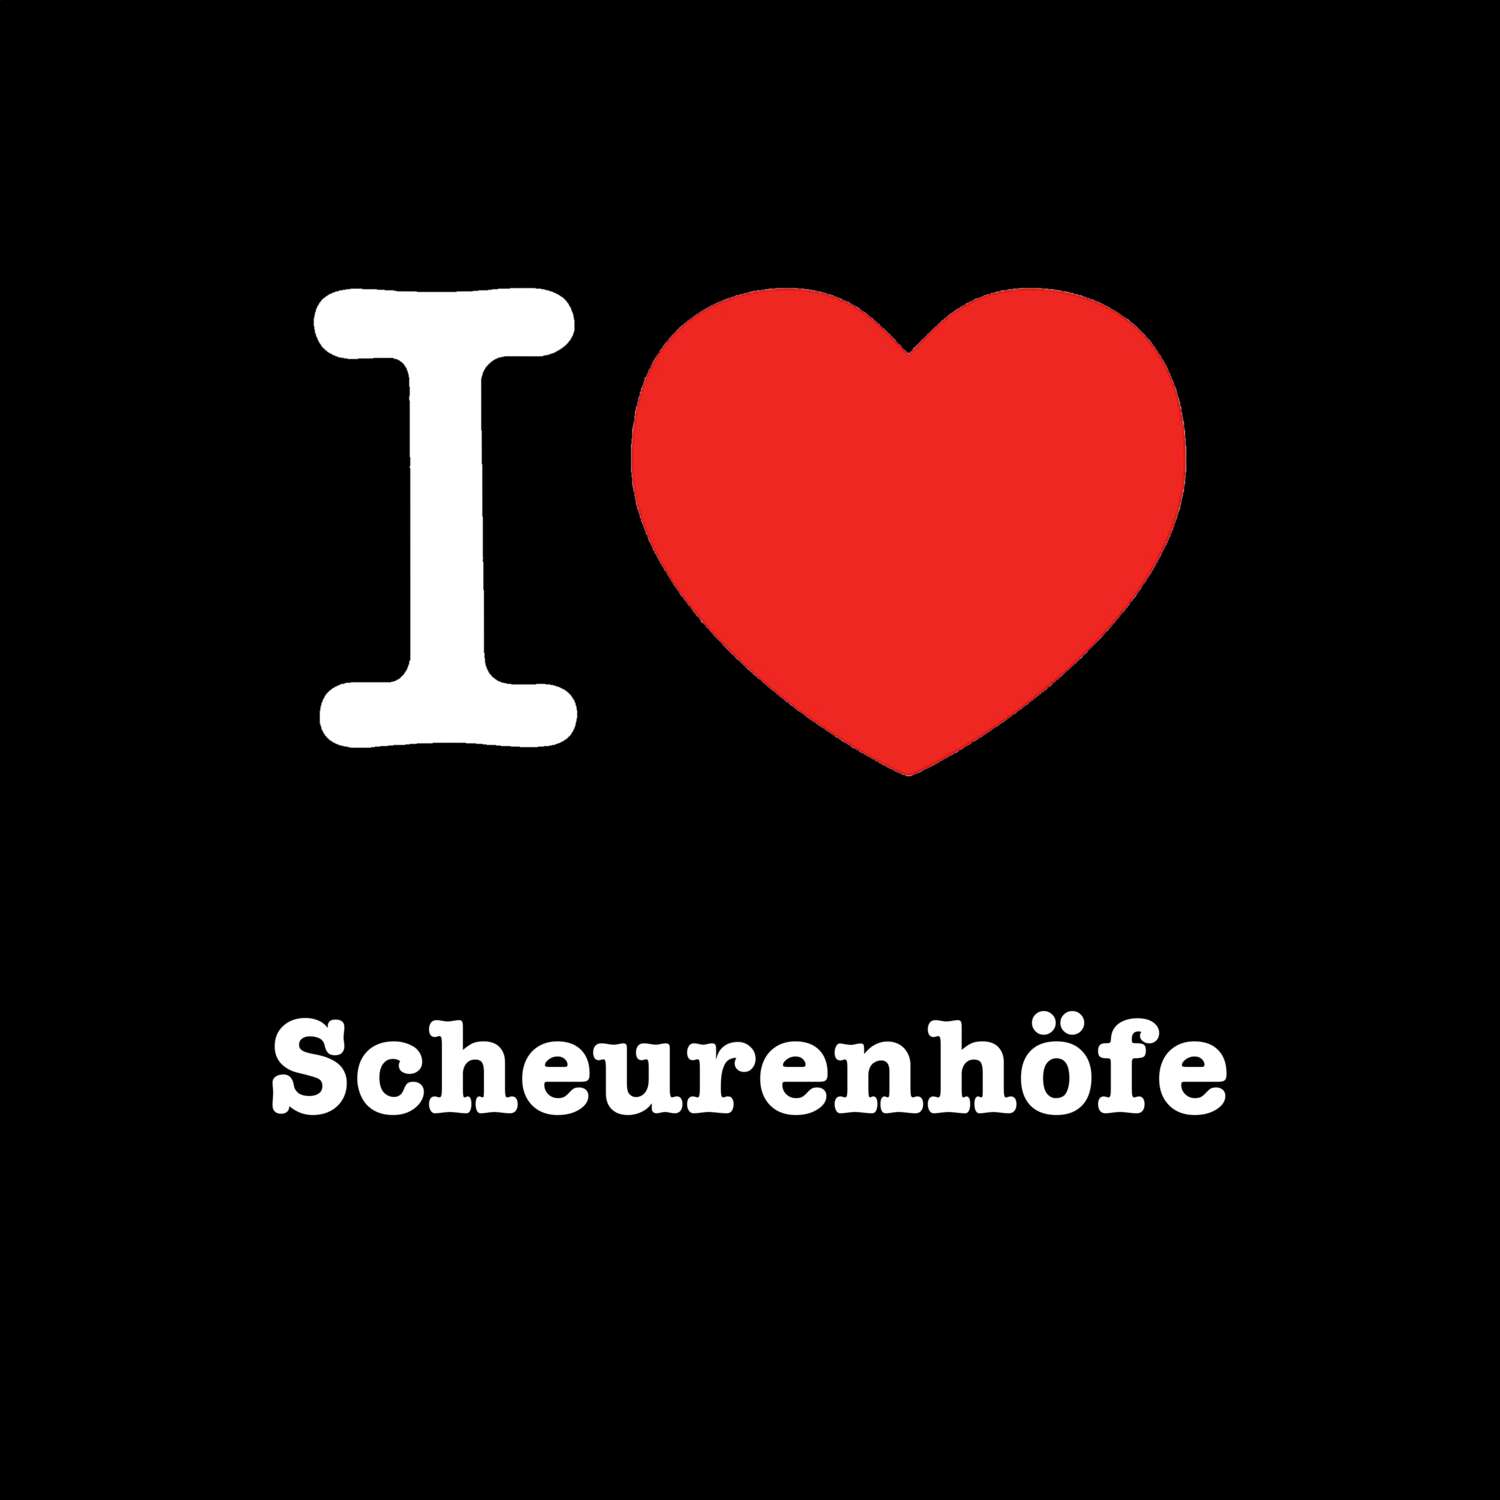 Scheurenhöfe T-Shirt »I love«